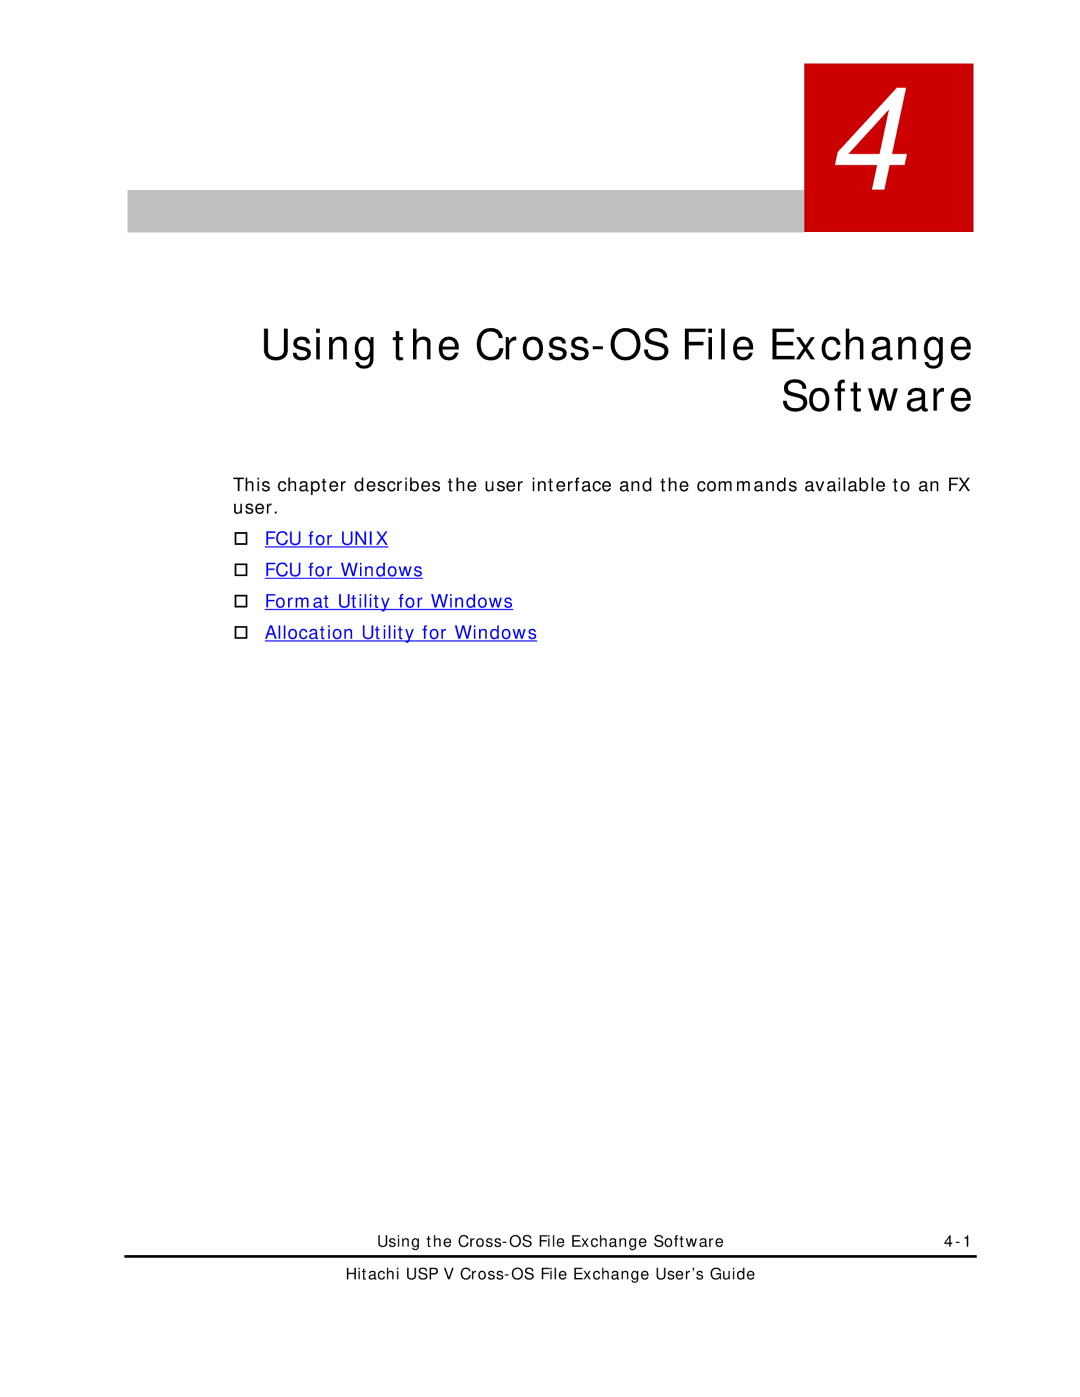 Hitachi MK-96RD647-01 manual Using the Cross-OS File Exchange Software 